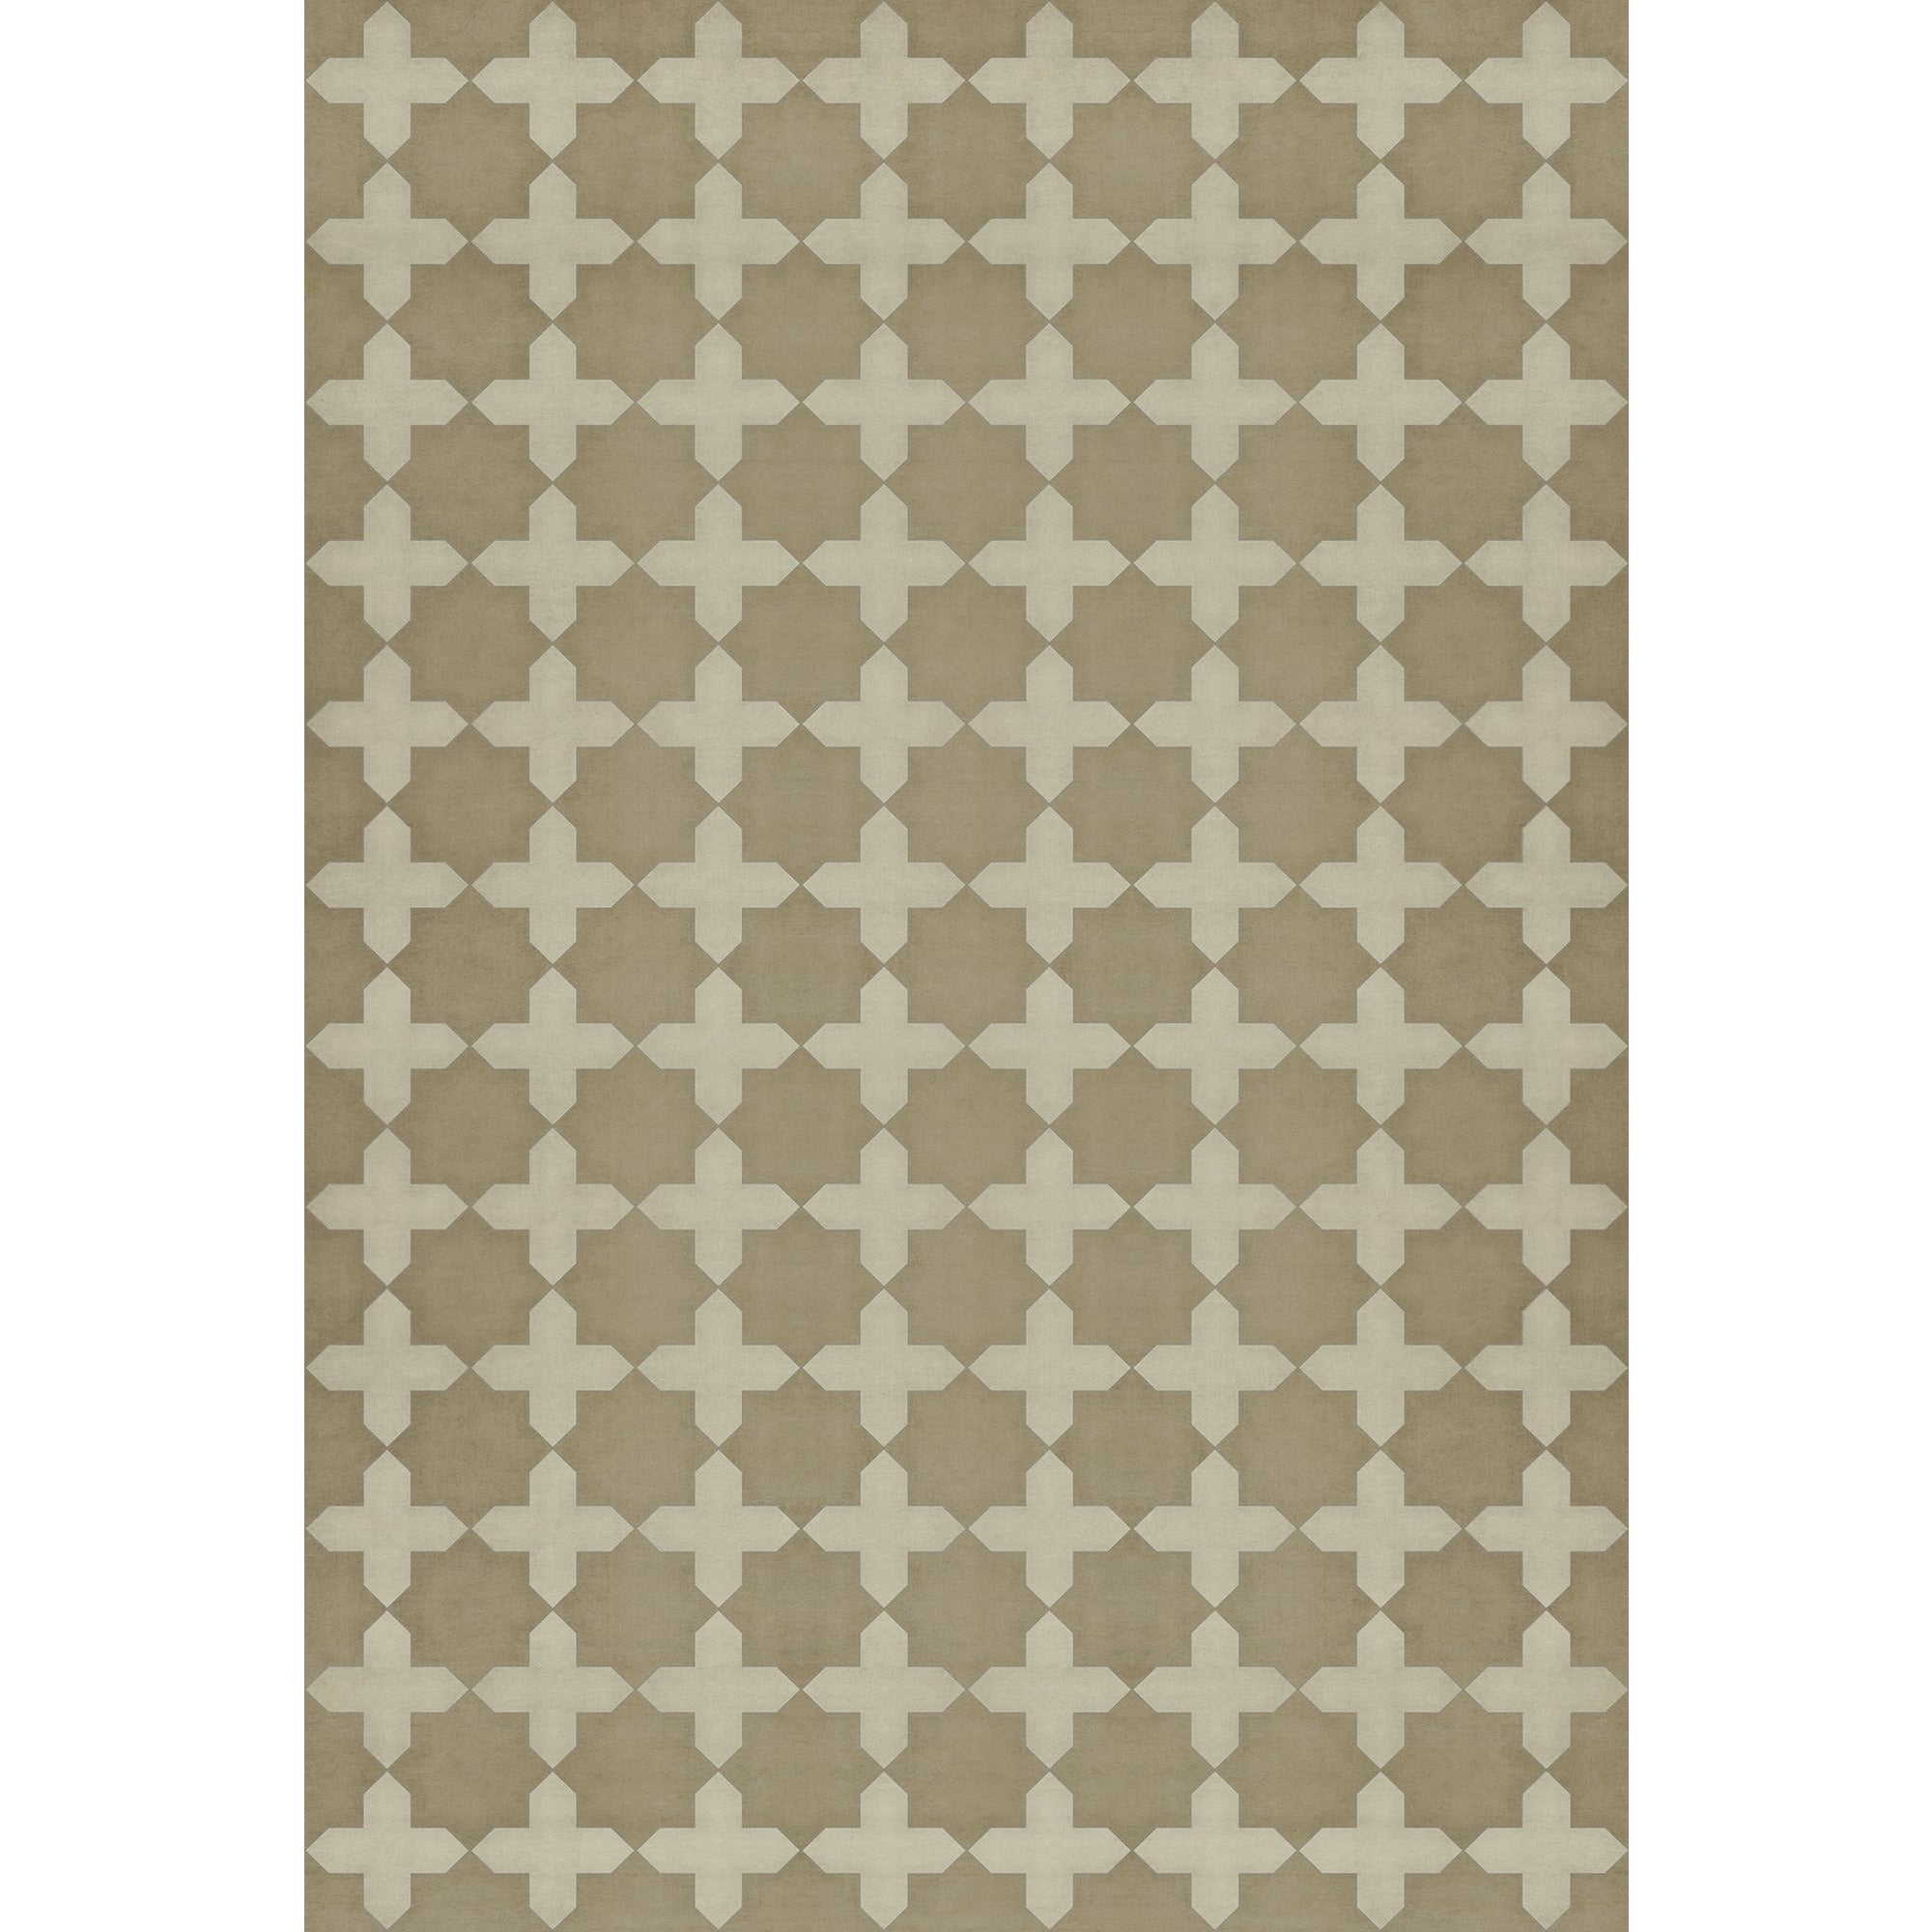 Pattern 23 Disciple Vinyl Floor Cloth